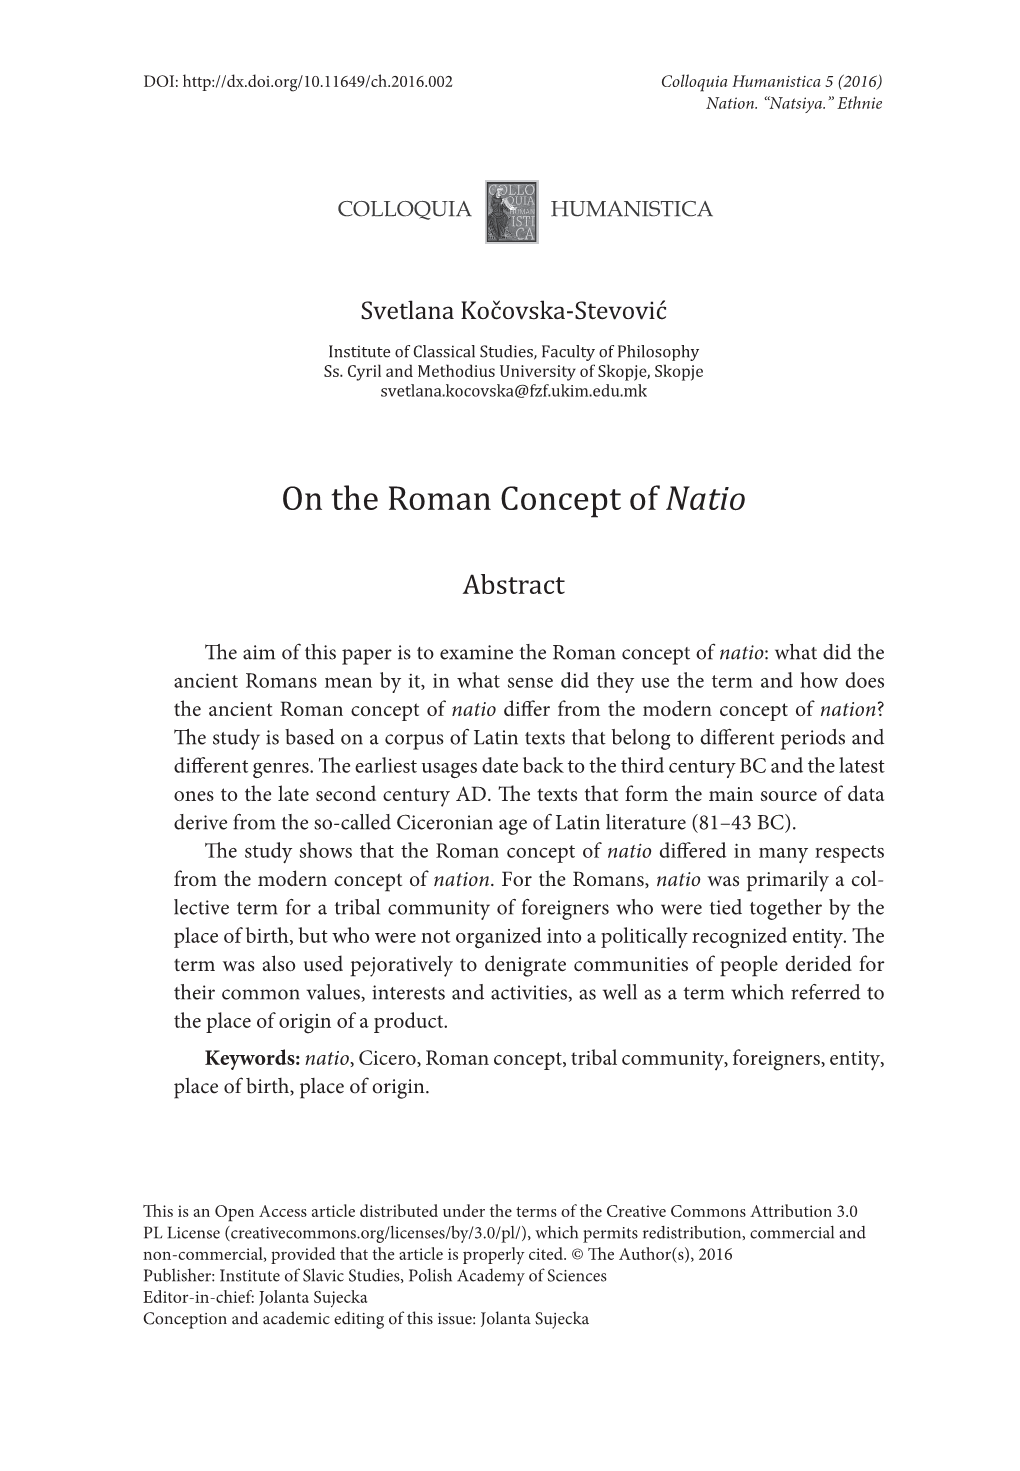 On the Roman Concept of Natio